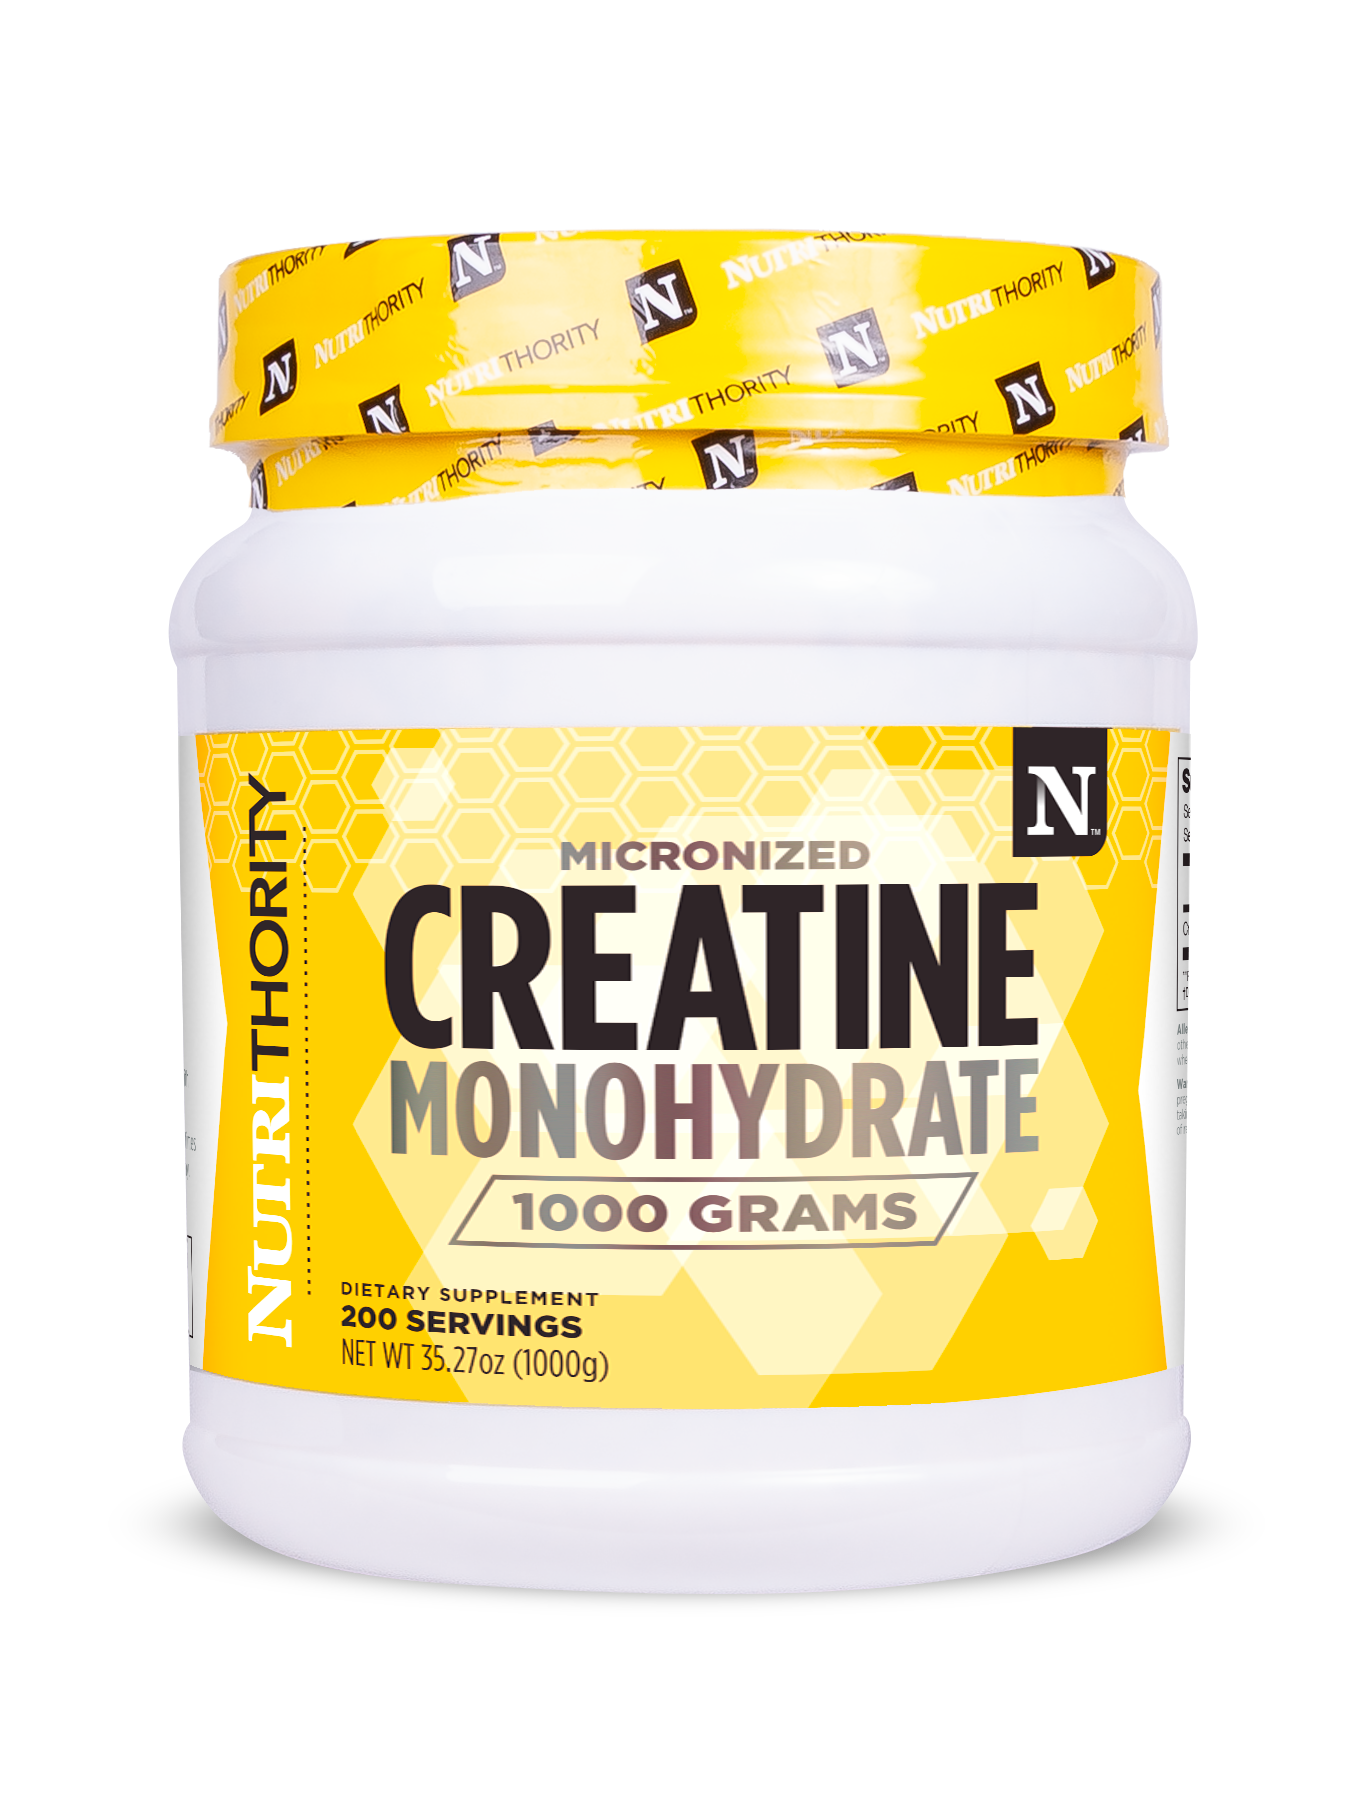 Nutrithority Micronized Creatine Monohydrate